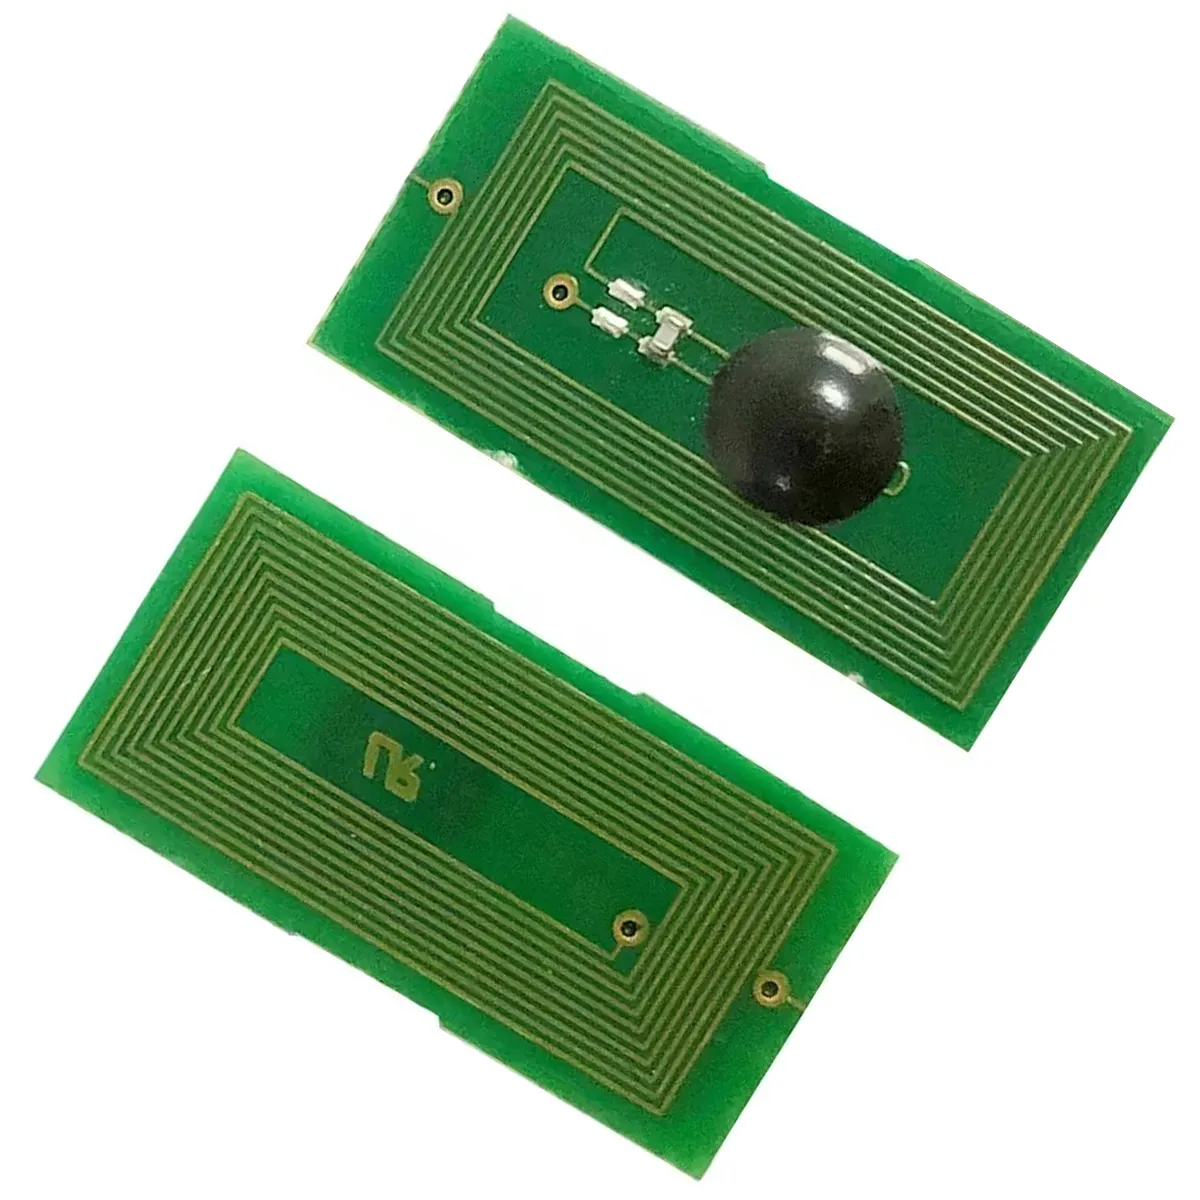 Chips nuovissima cartuccia toner per chip Savin SP 5200DN reset chip originali fotocopiatrice/per resettatori ricoh